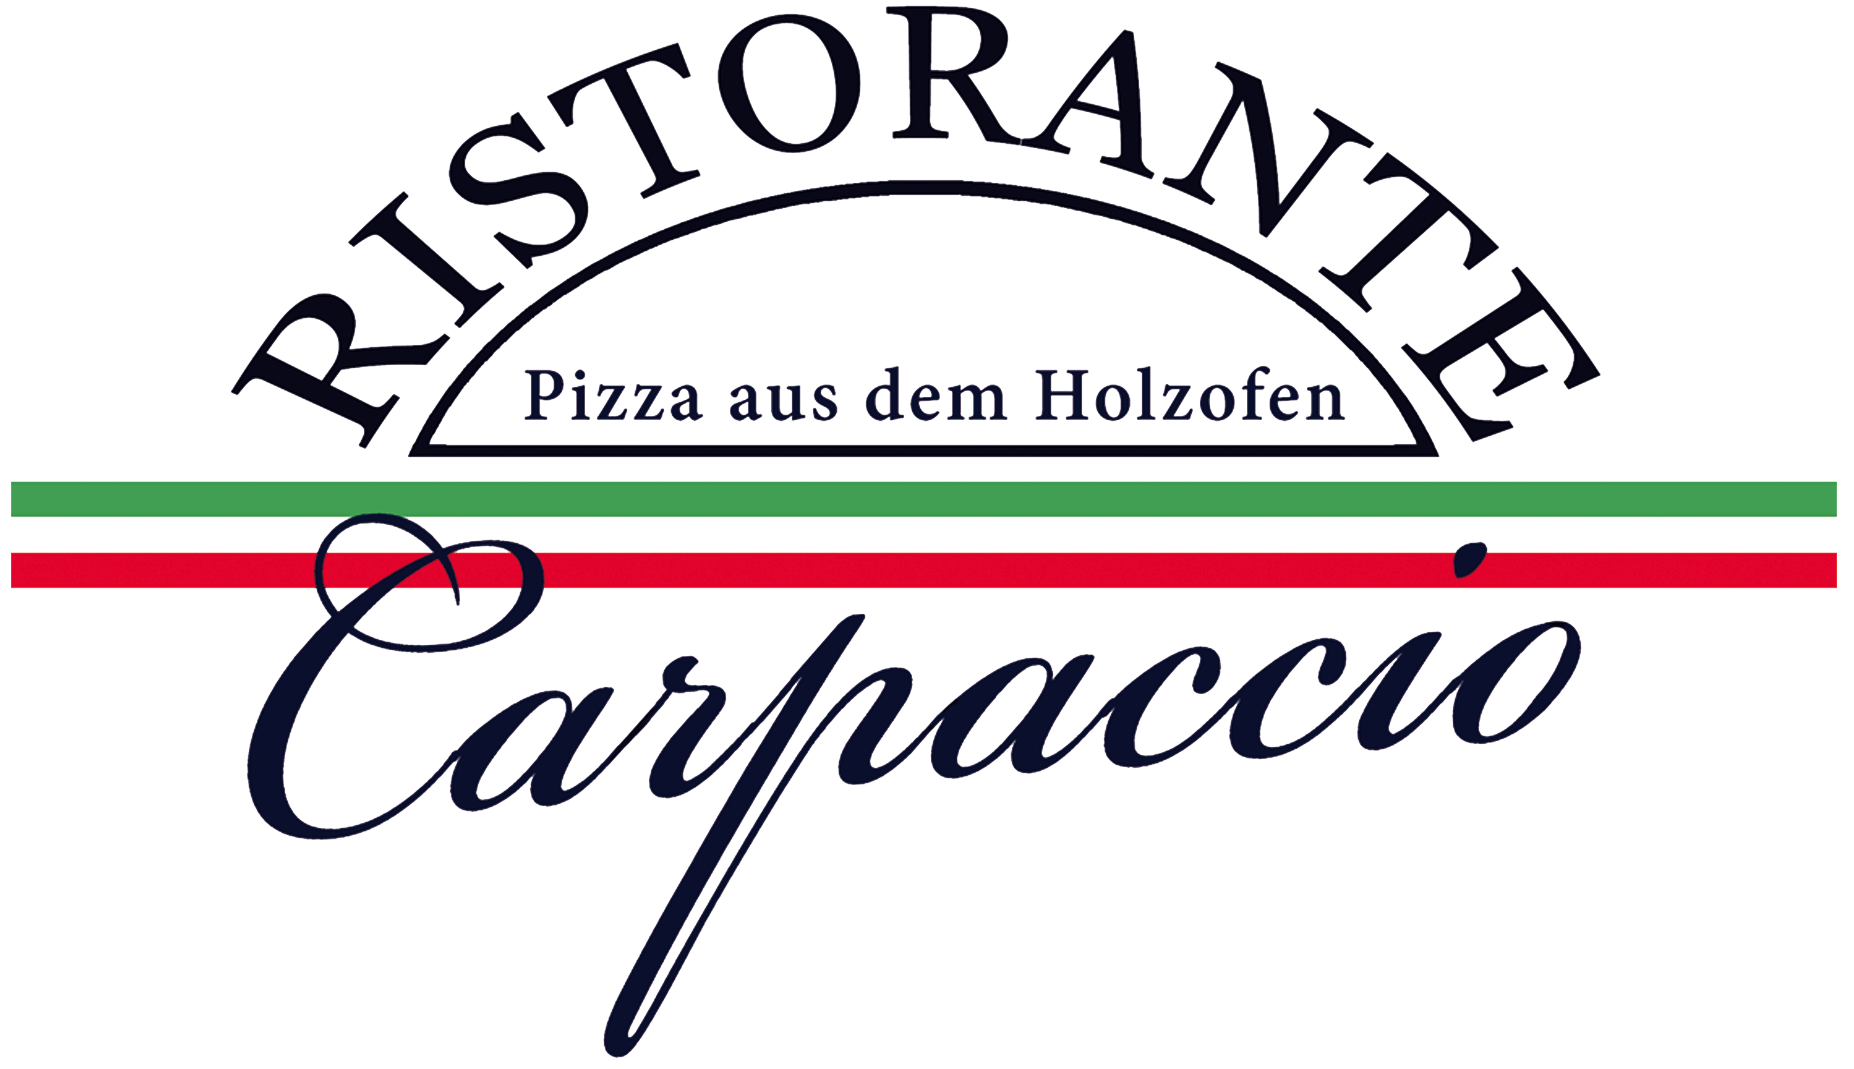 Pizzeria with real wood stove  live - Ristorante Carpaccio Erlangen